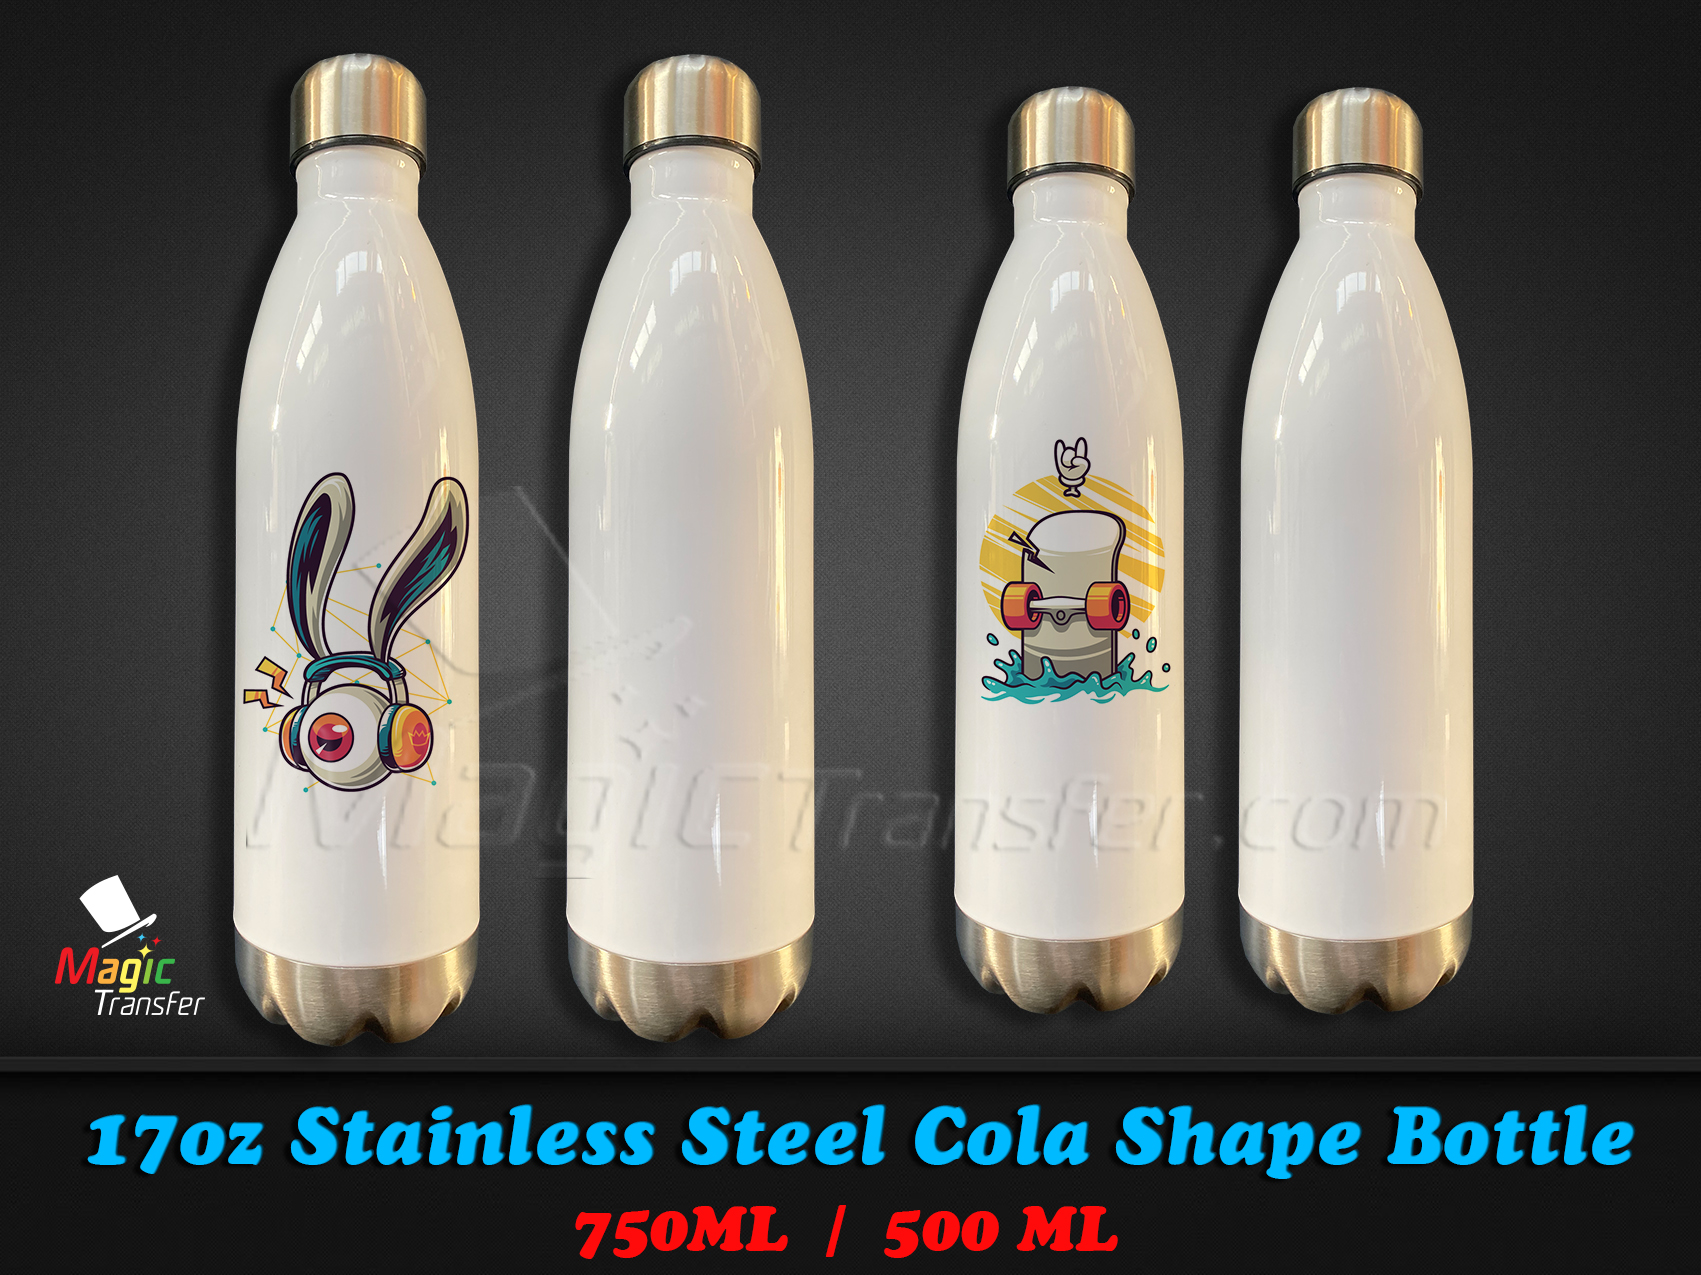 17oz Stainless Steel Cola Shape Bottle 750ML / 500ML